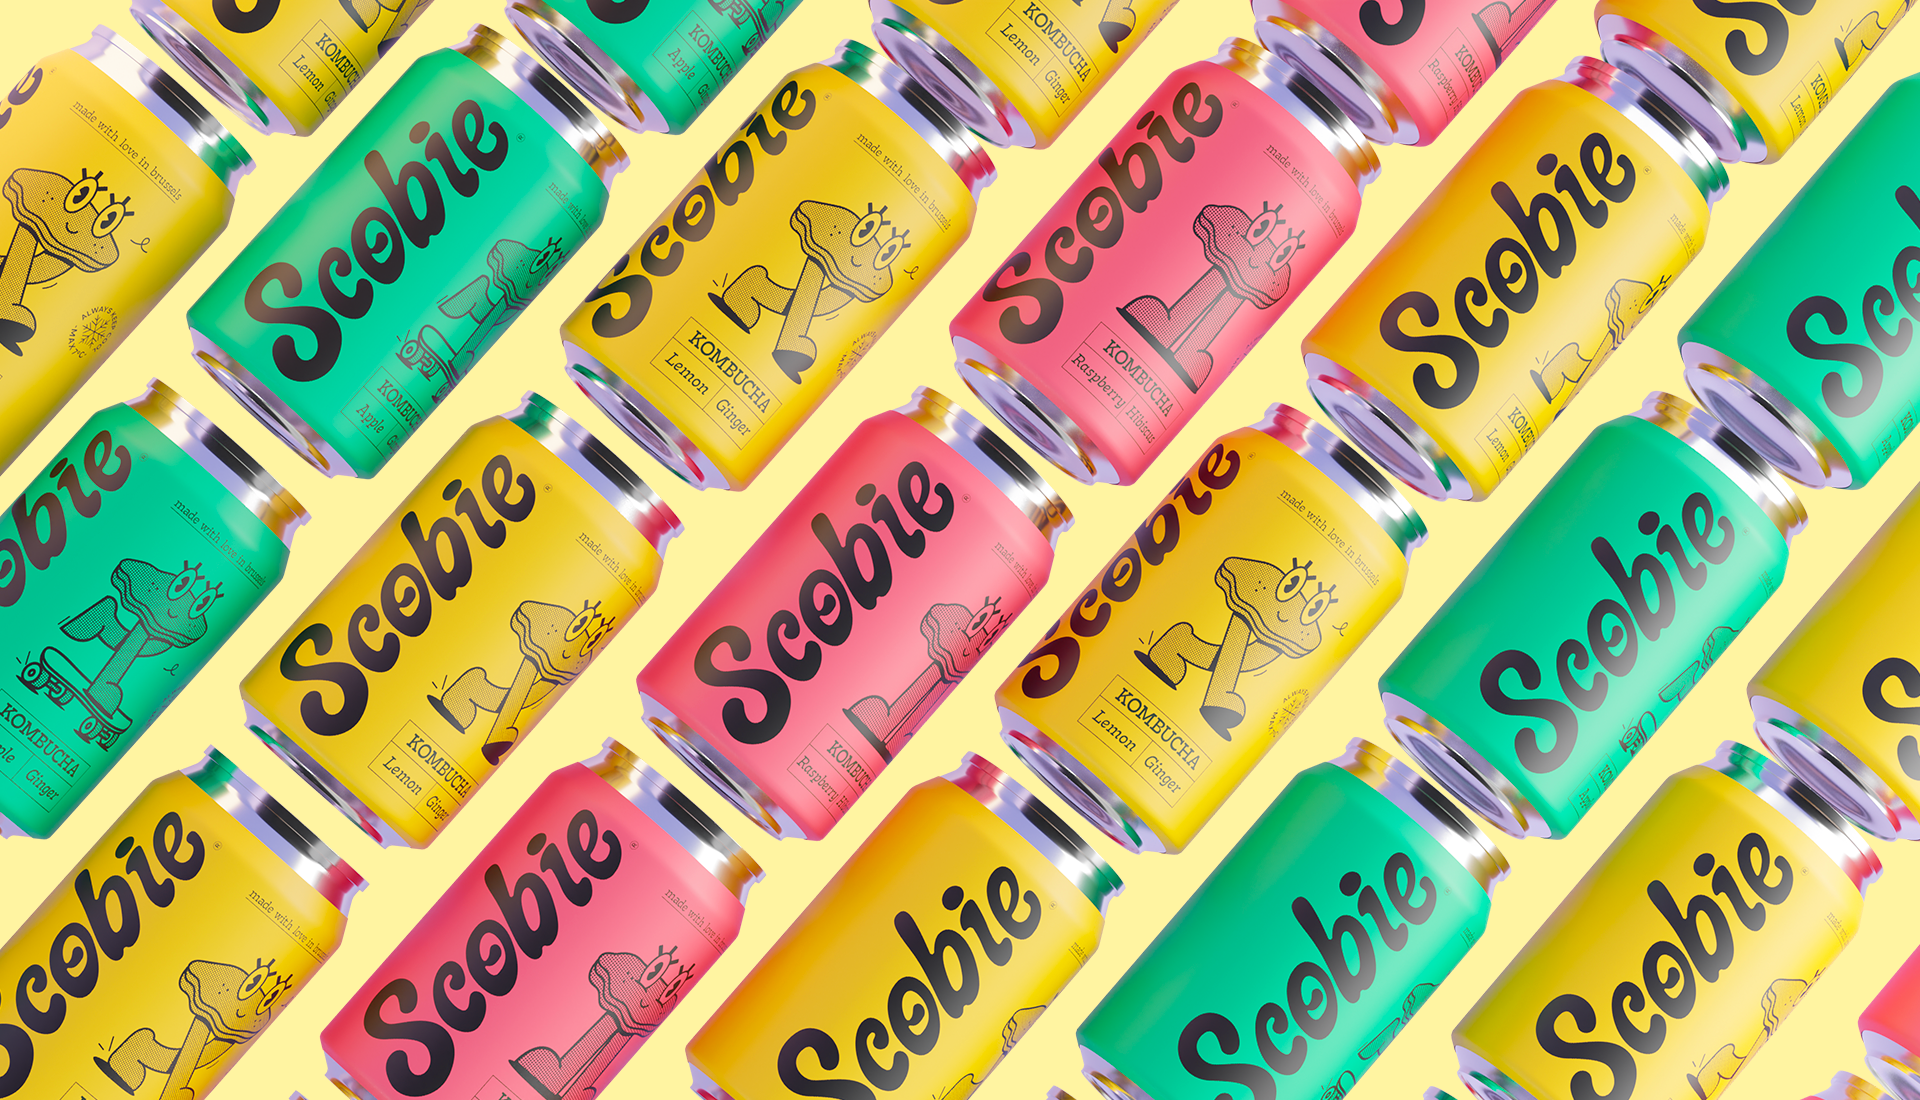 Scobie-multiple-can